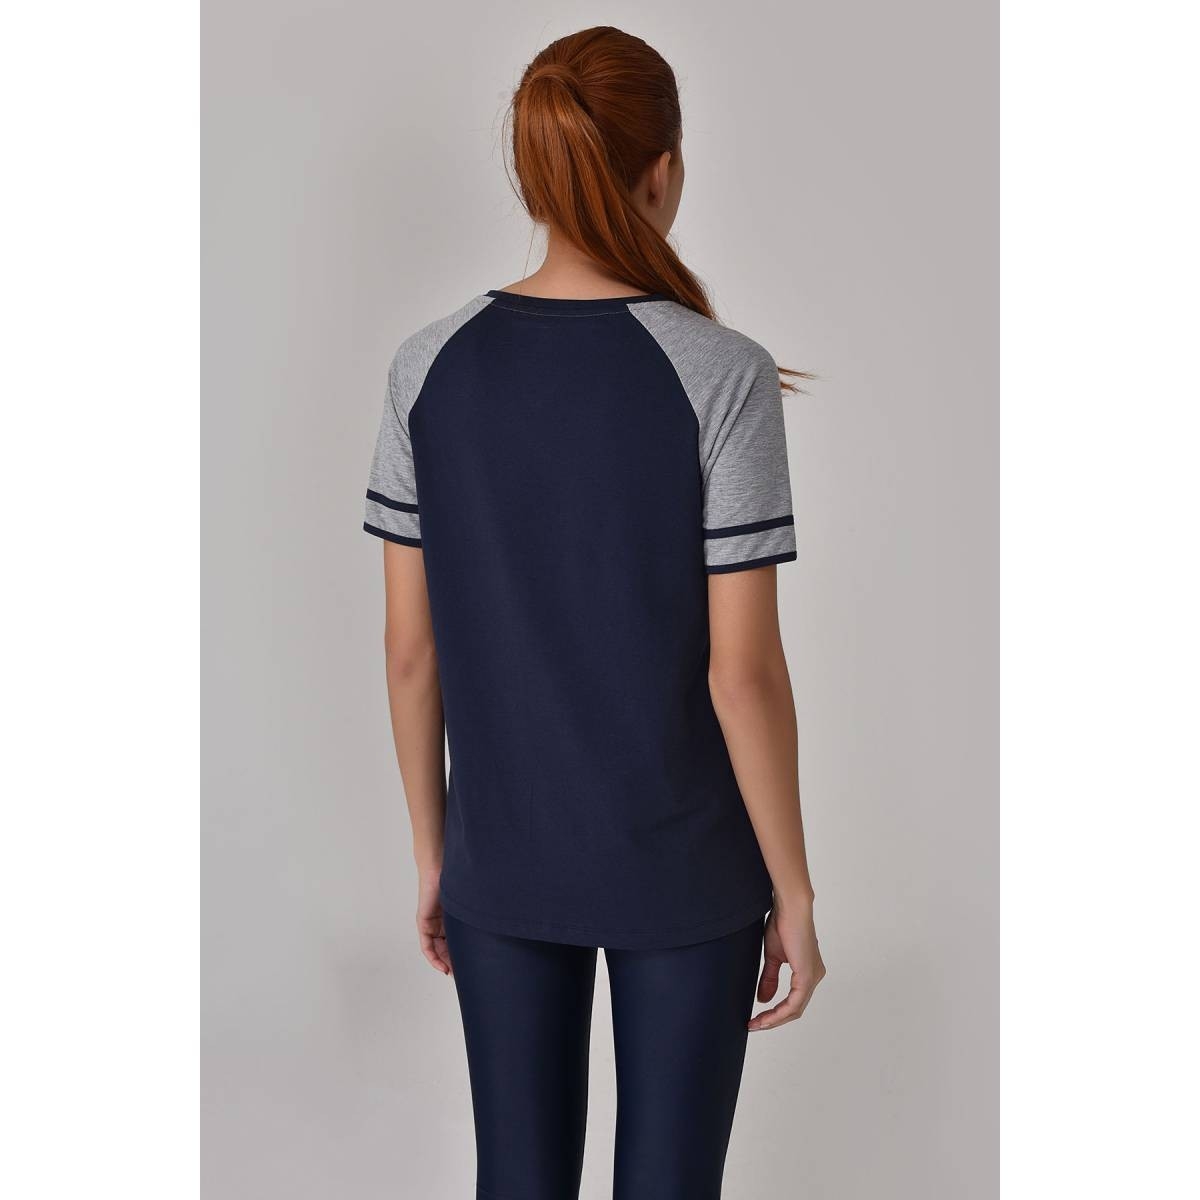 Flo Lacivert Kadın T-Shirt GS-8616. 5